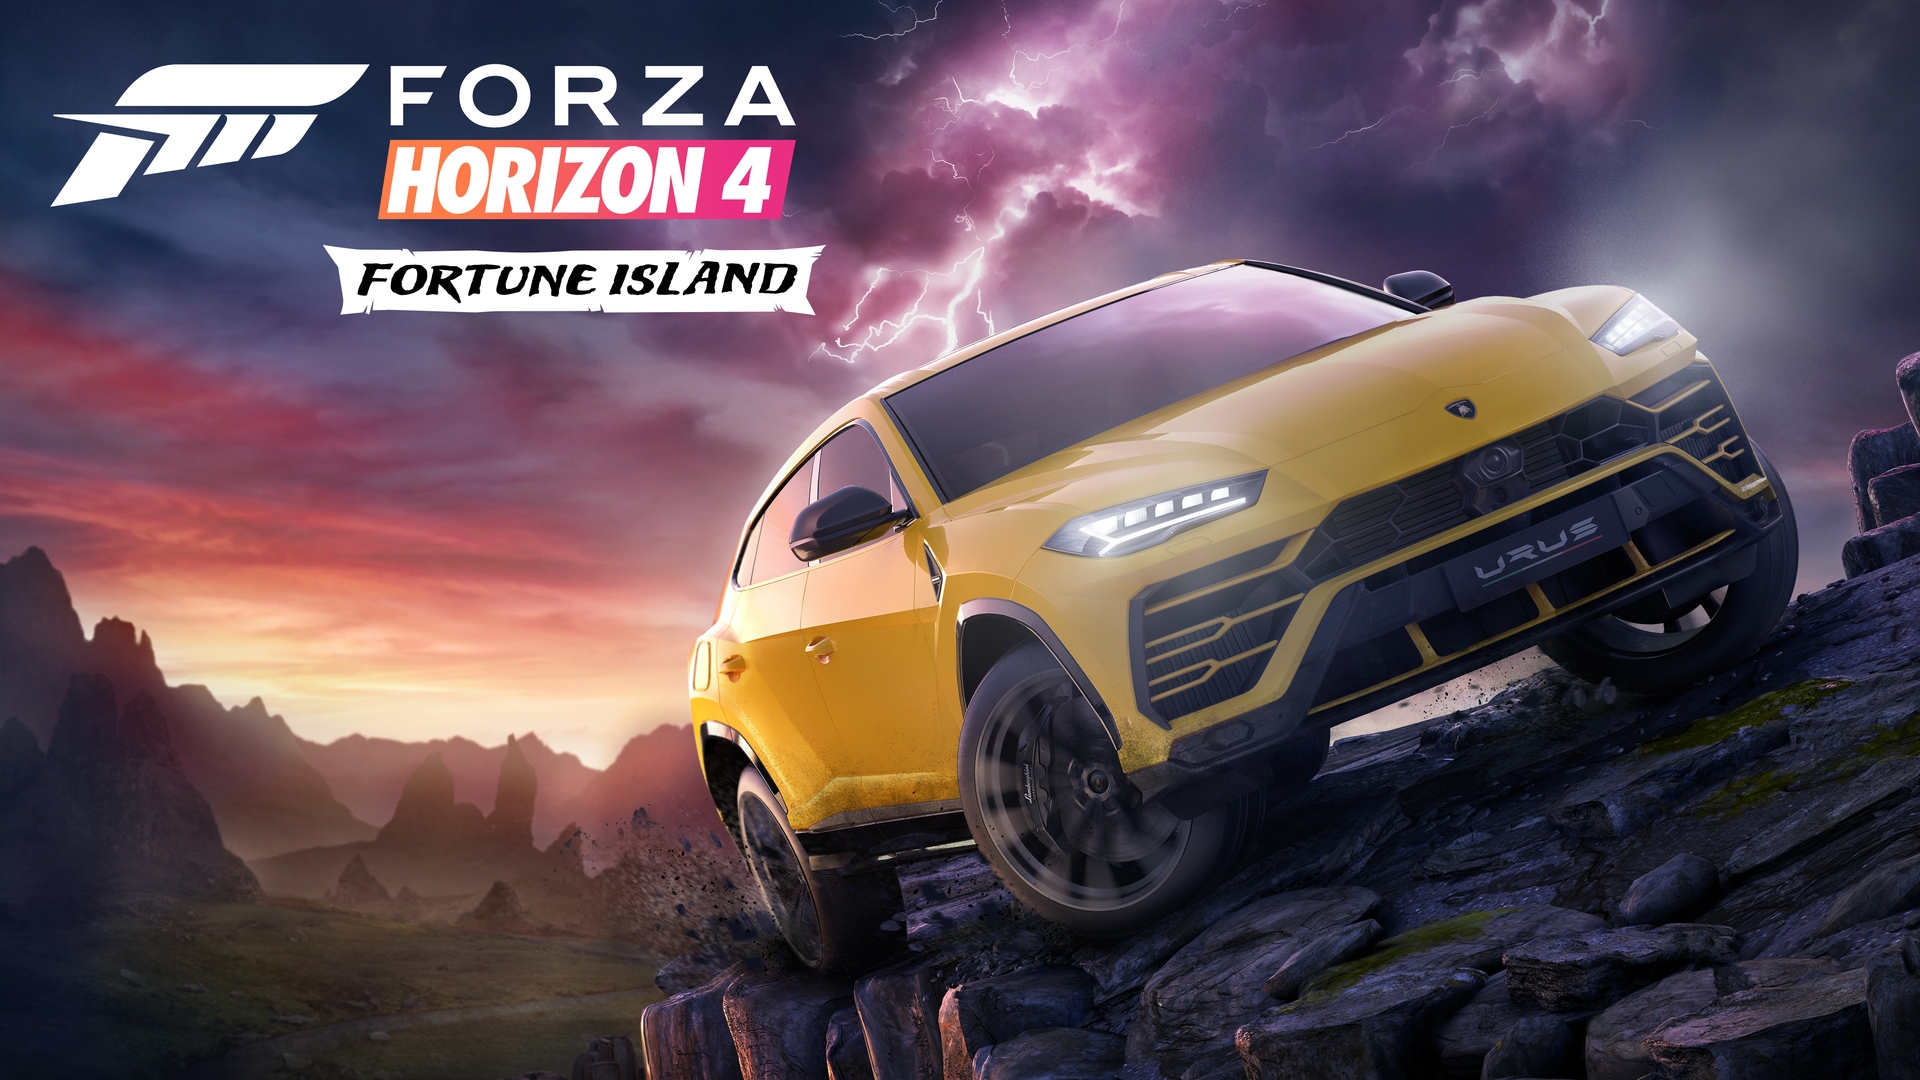 General 1920x1080 Forza Horizon 4 video games car logo headlights mountains